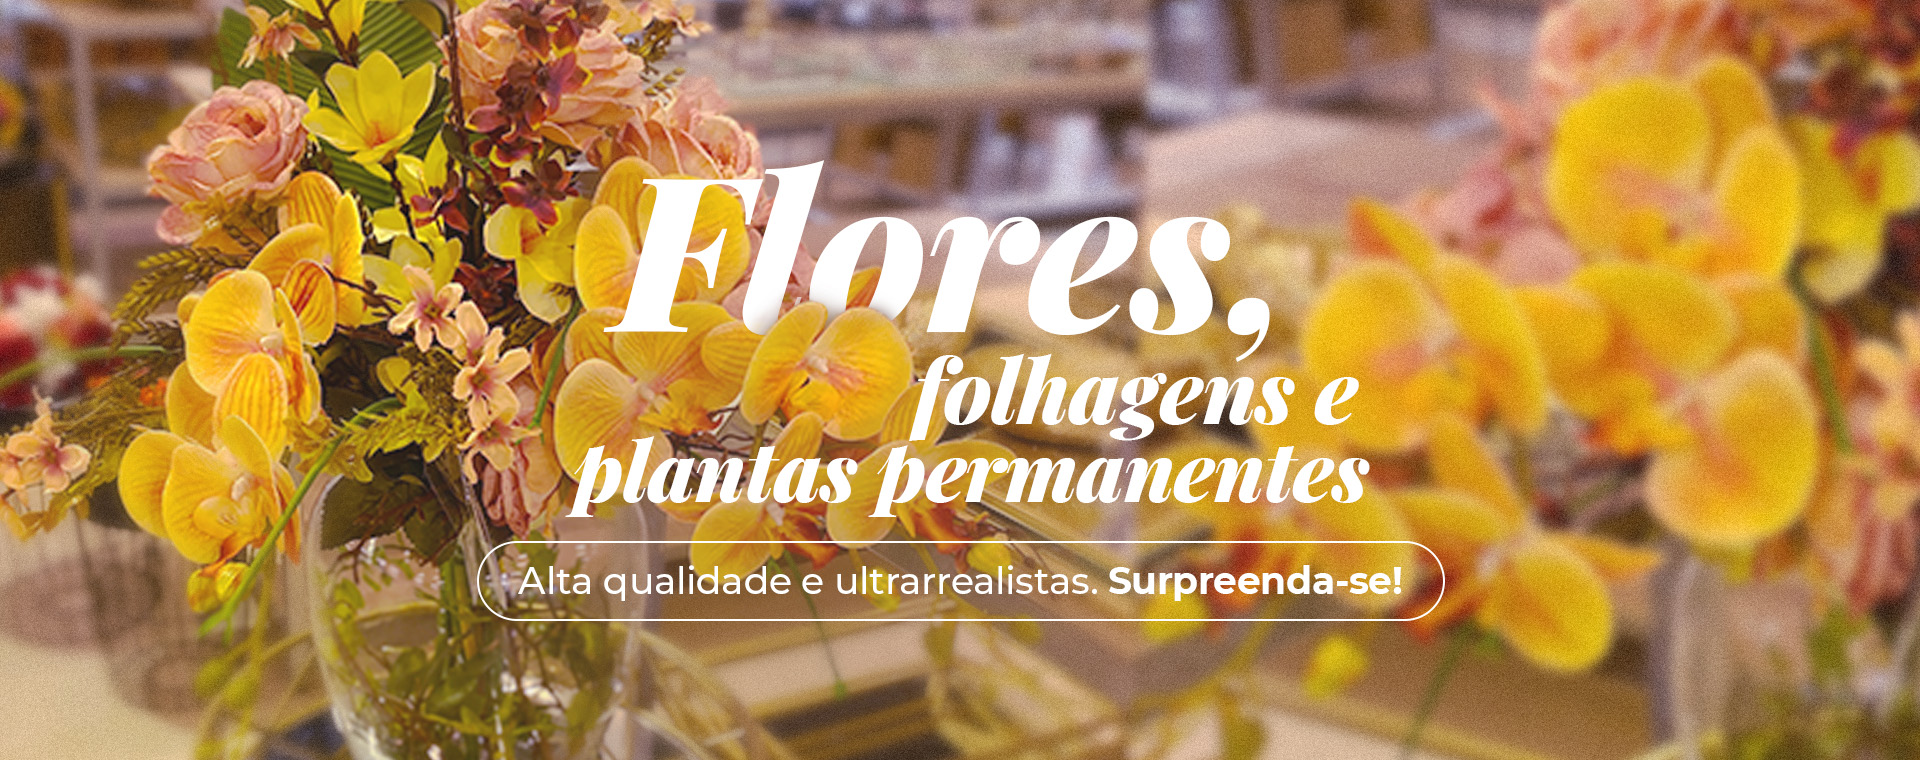 Banner-Flores-1920x760px